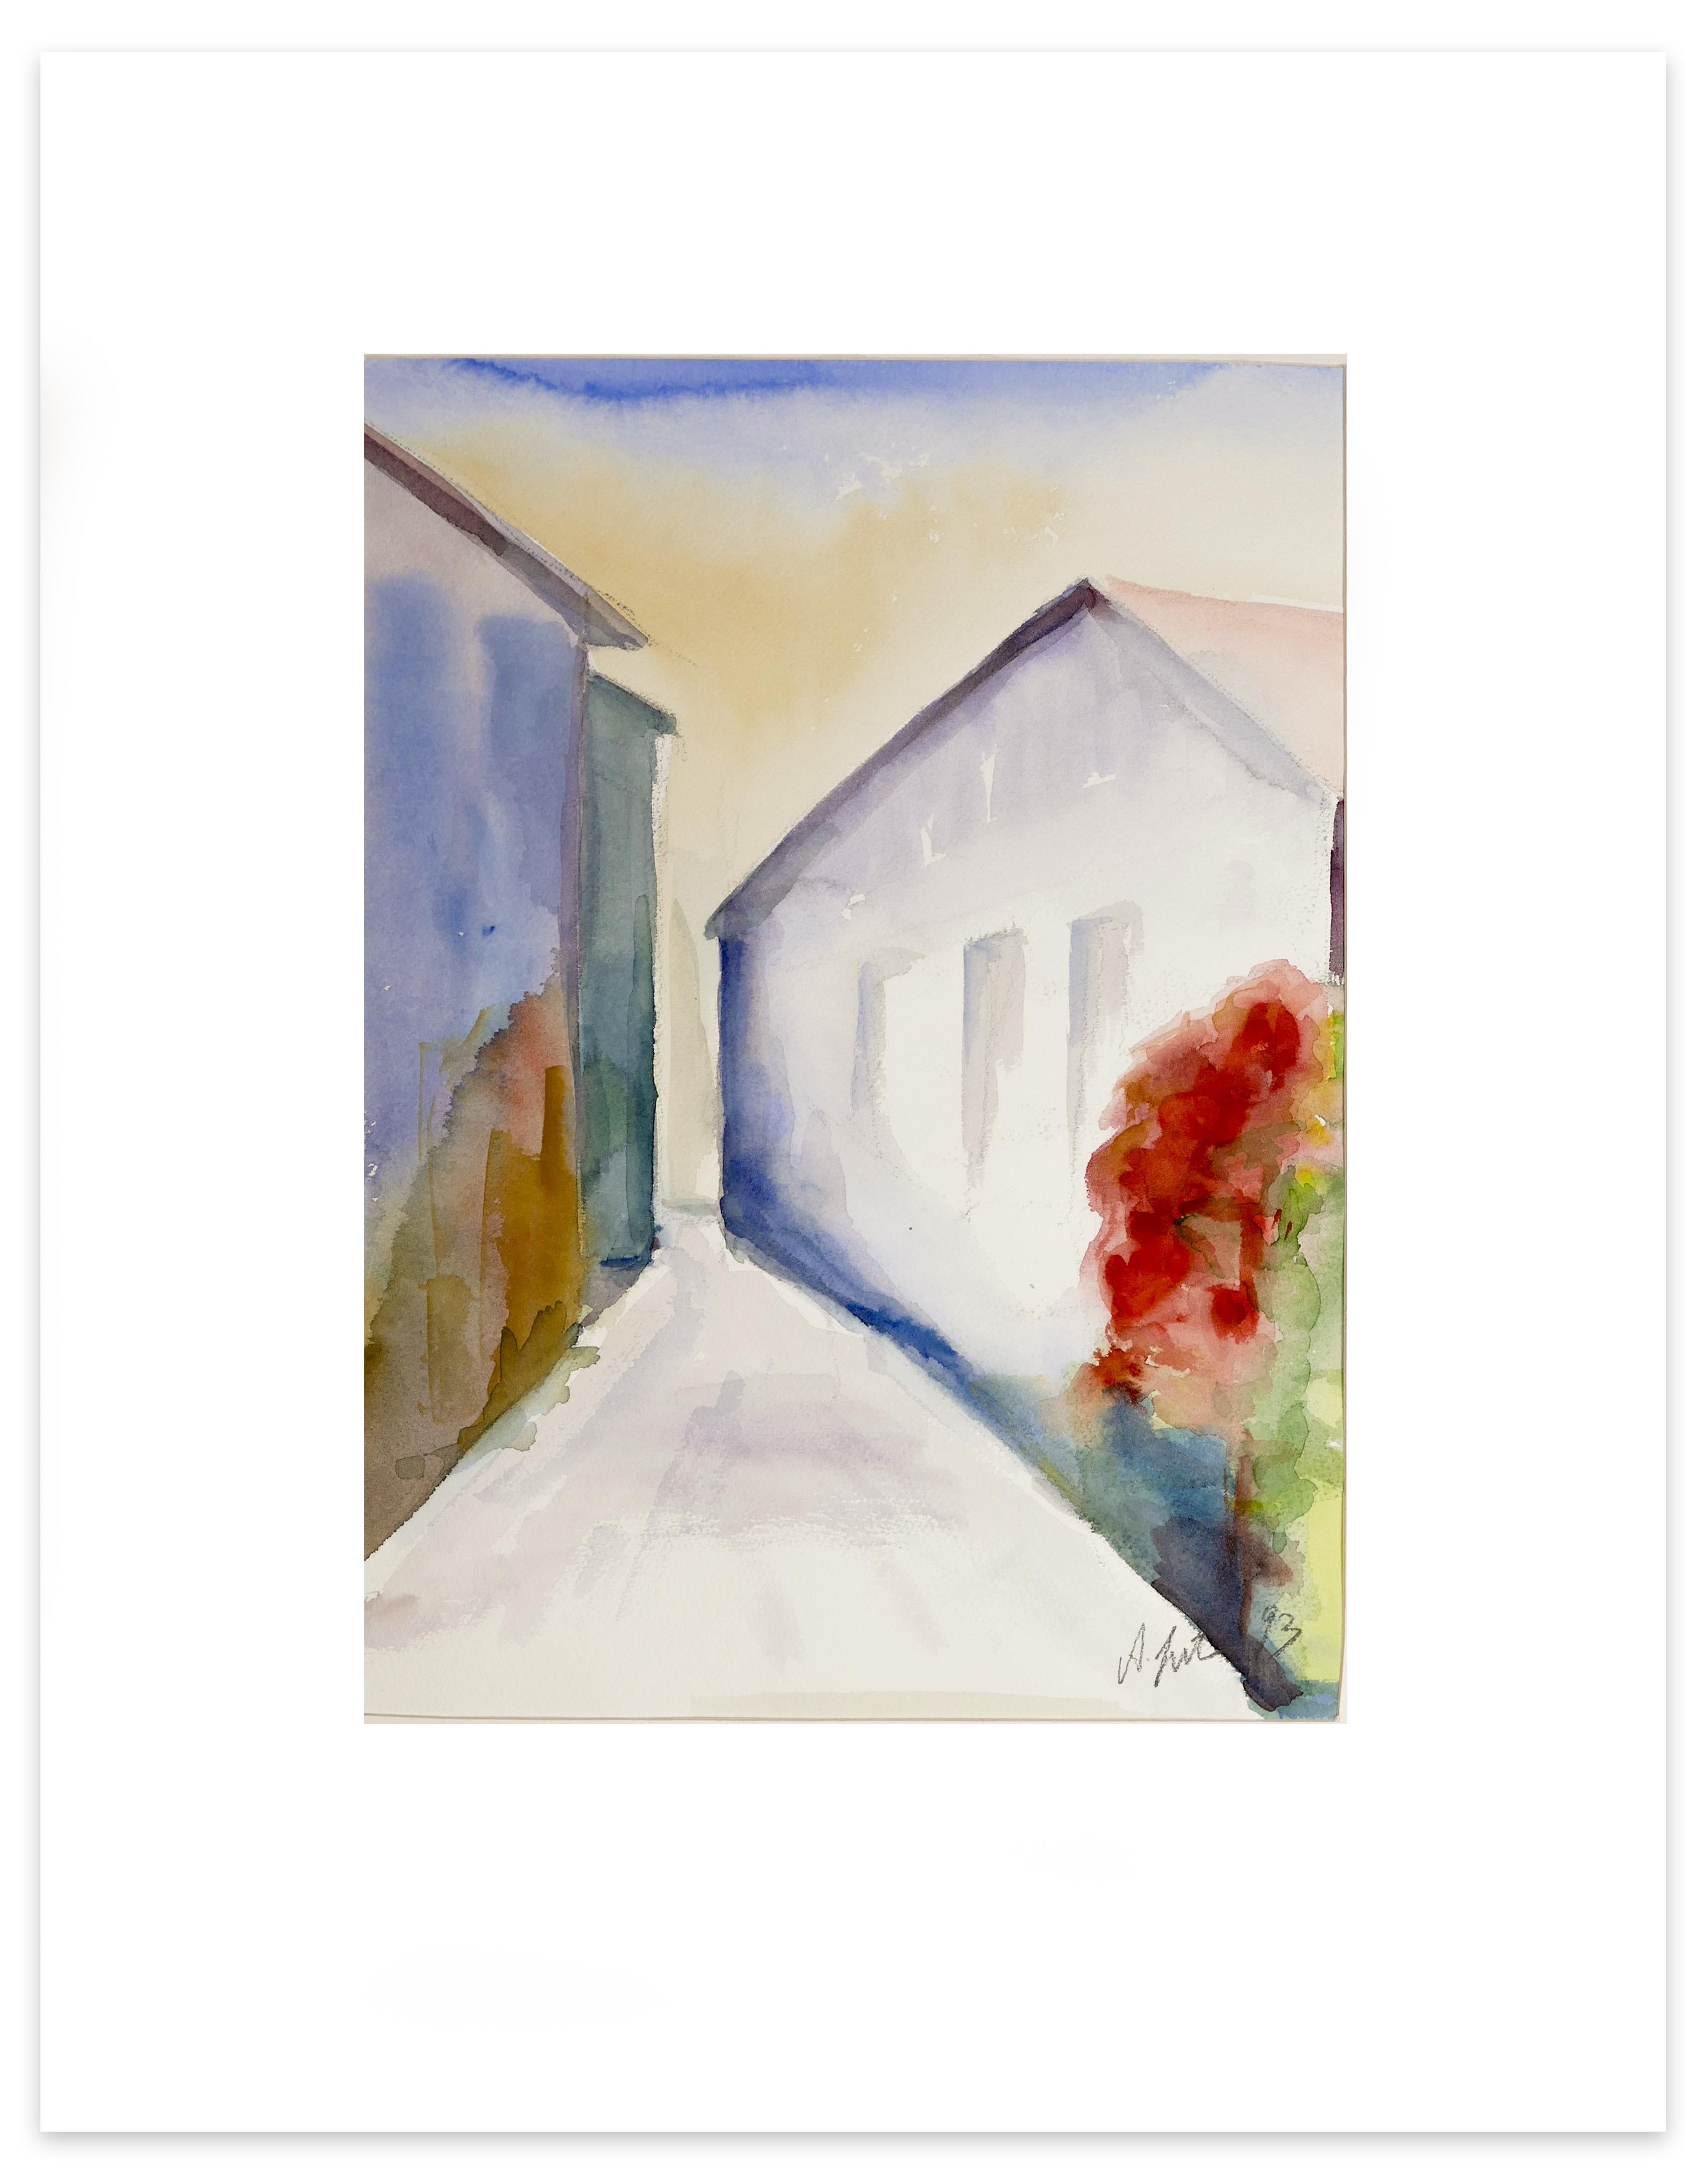 Narrow Alley - Original Watercolor by Armin Guther - 1993